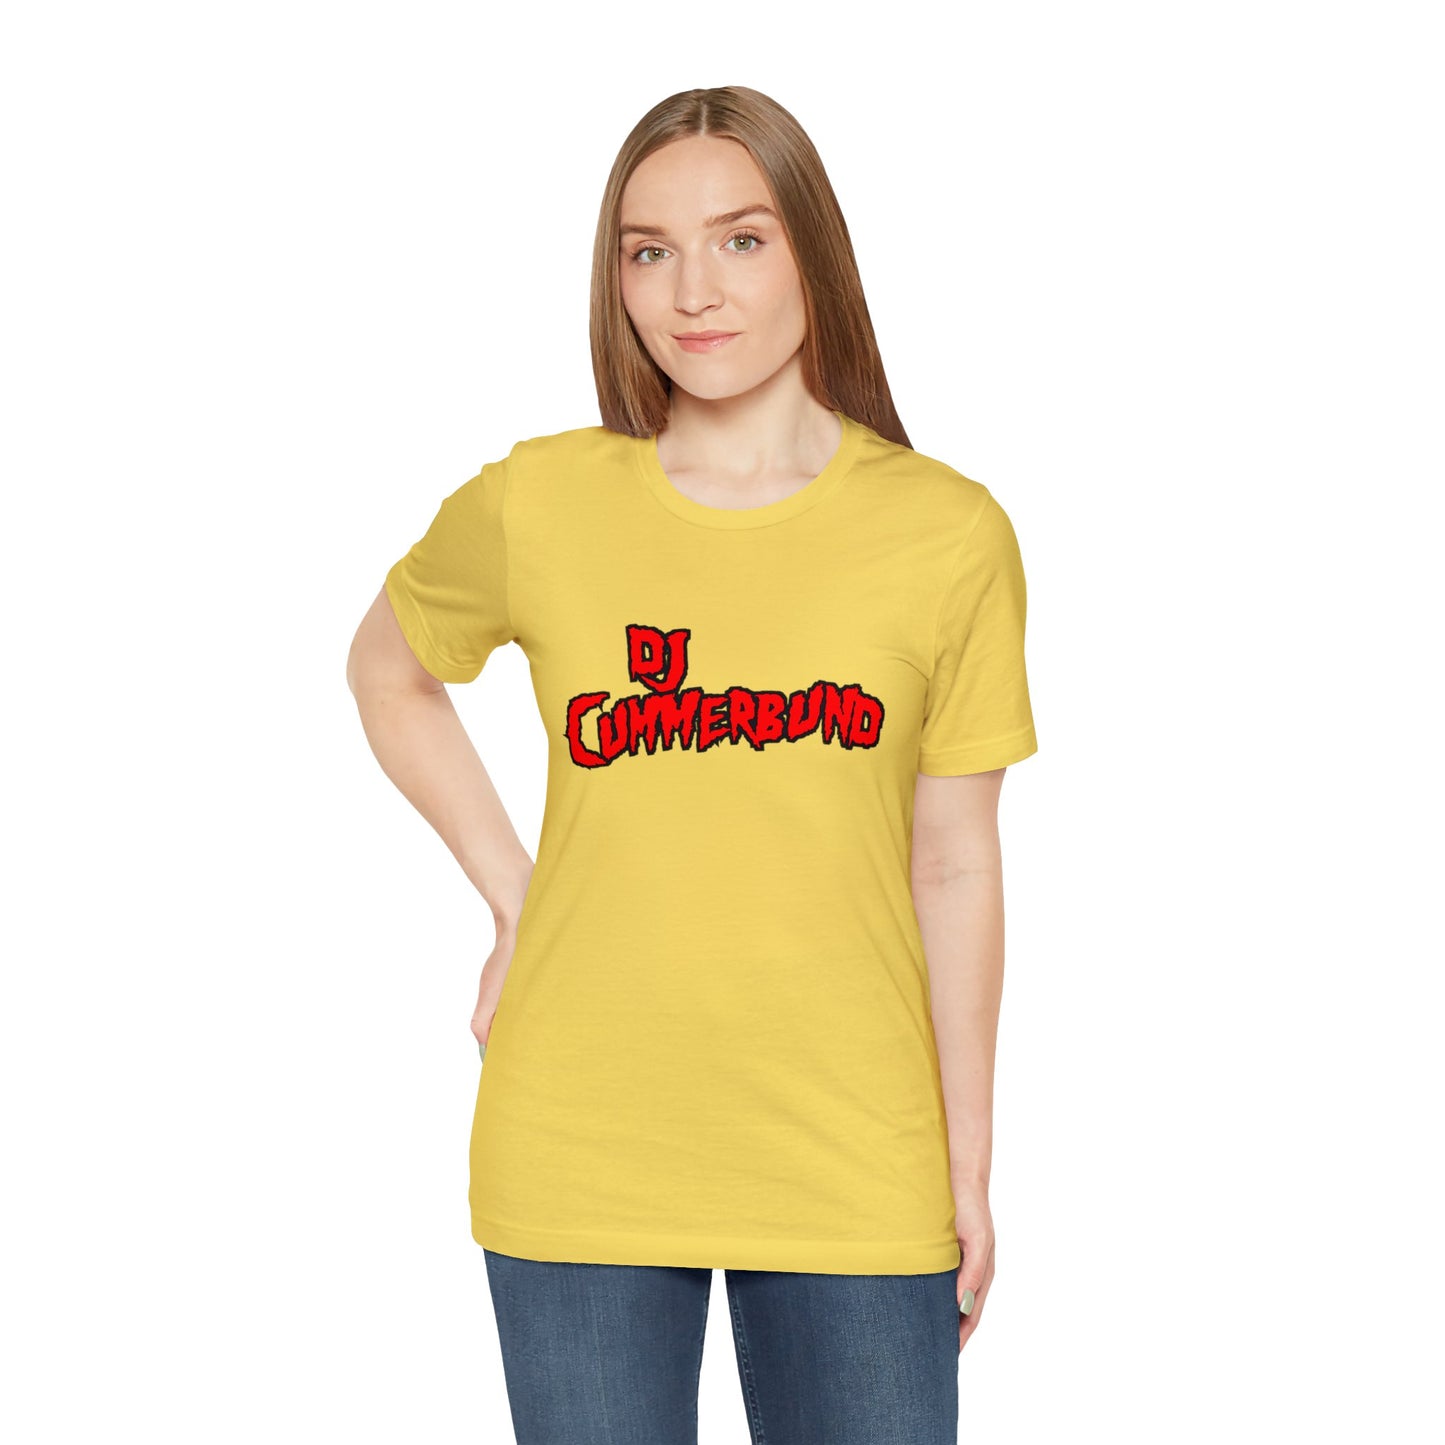 Bundamania Yellow T-Shirt